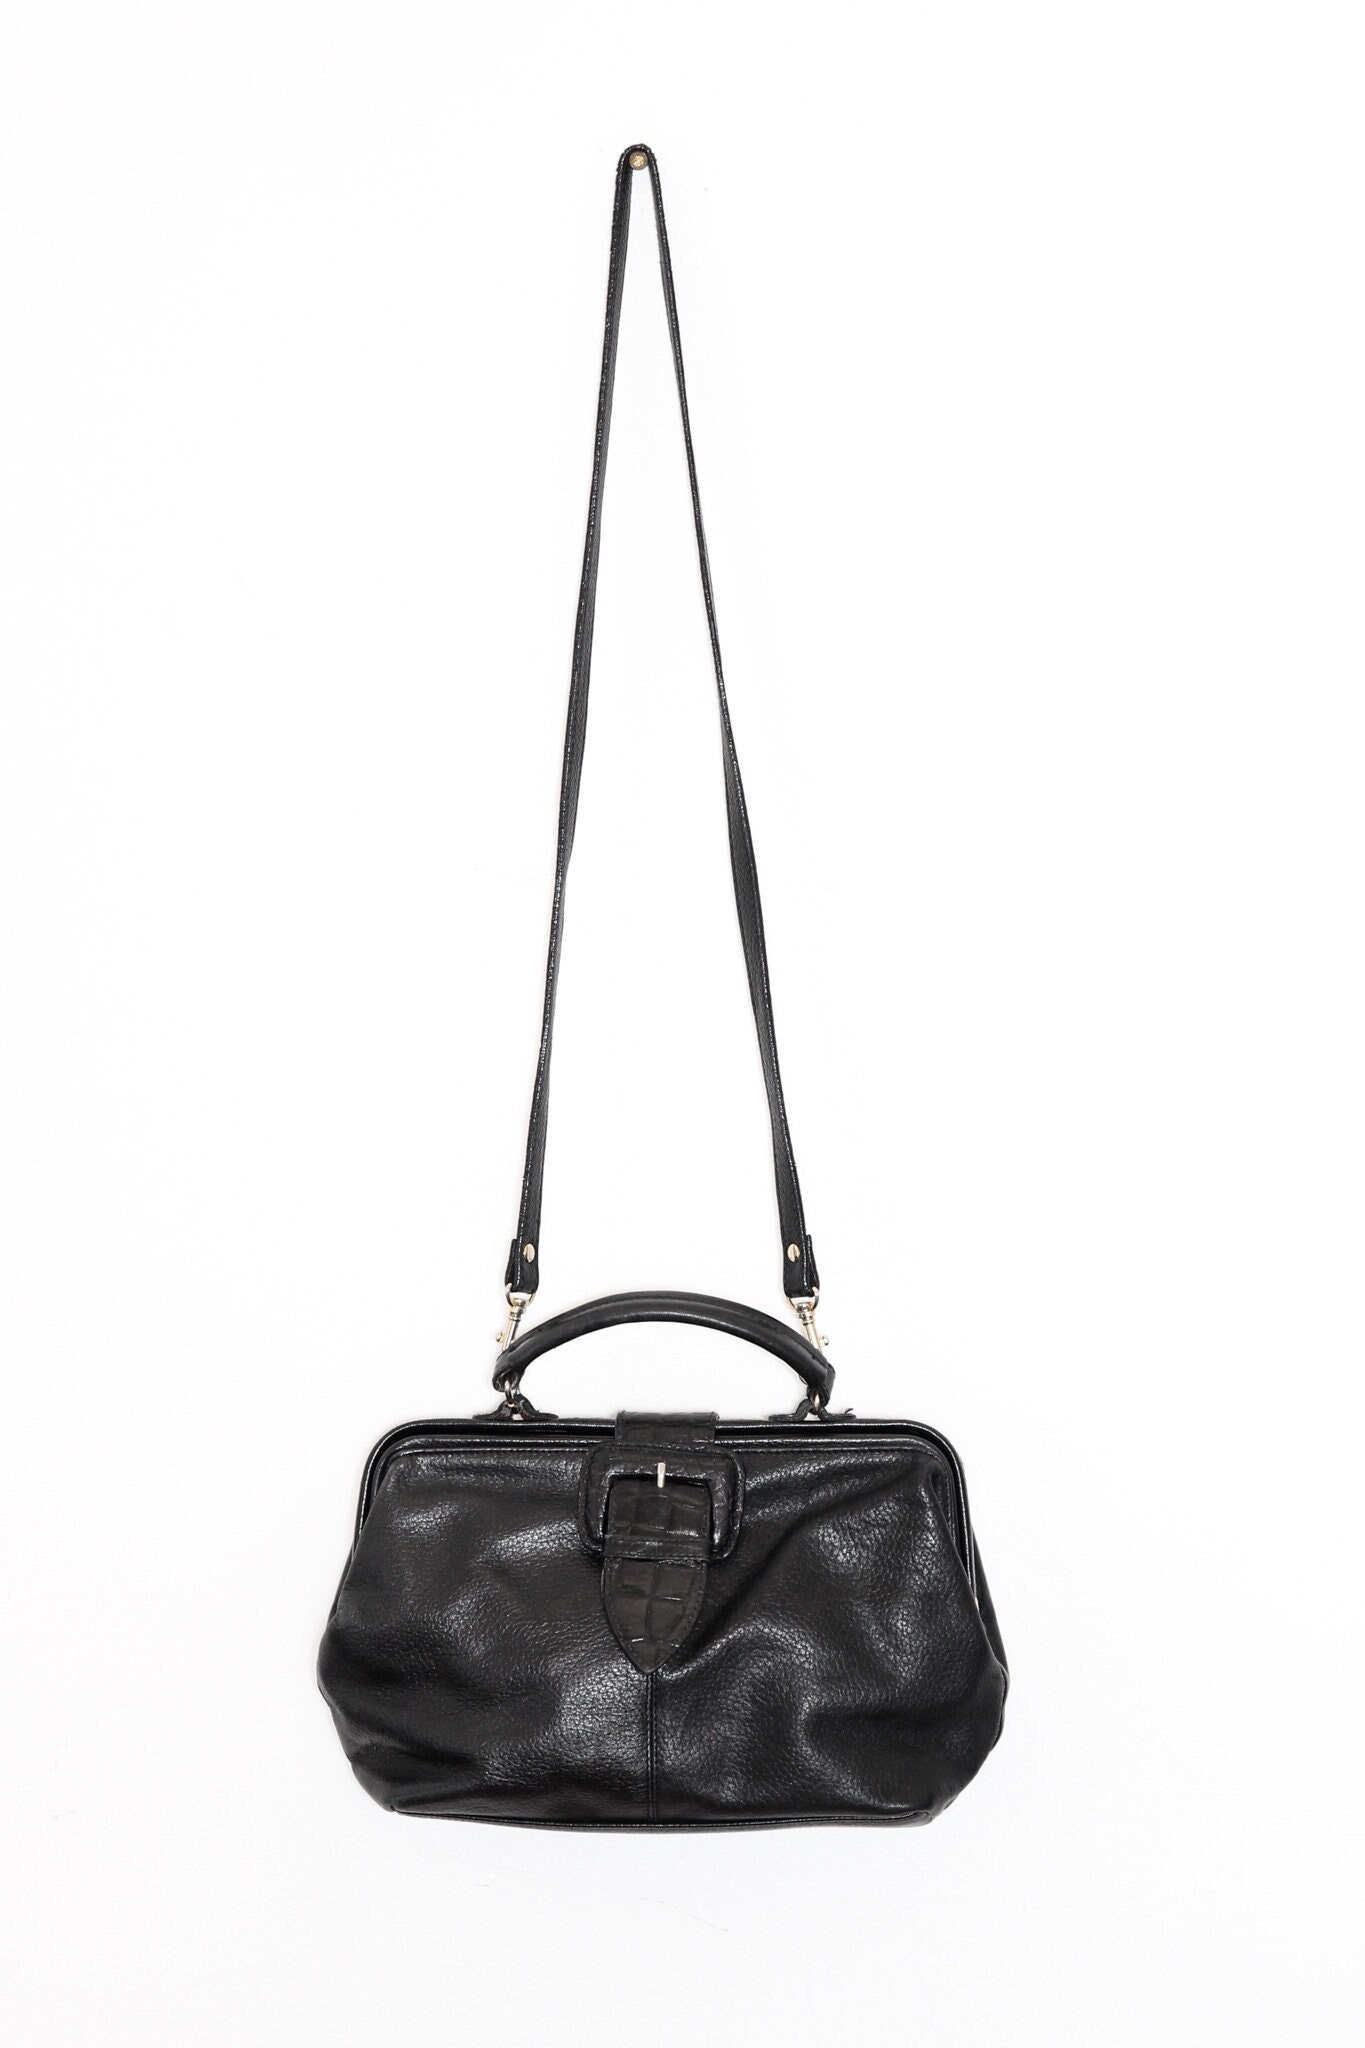 Black Leather Accordion Tote Bag, 80s leather tote purse wi…